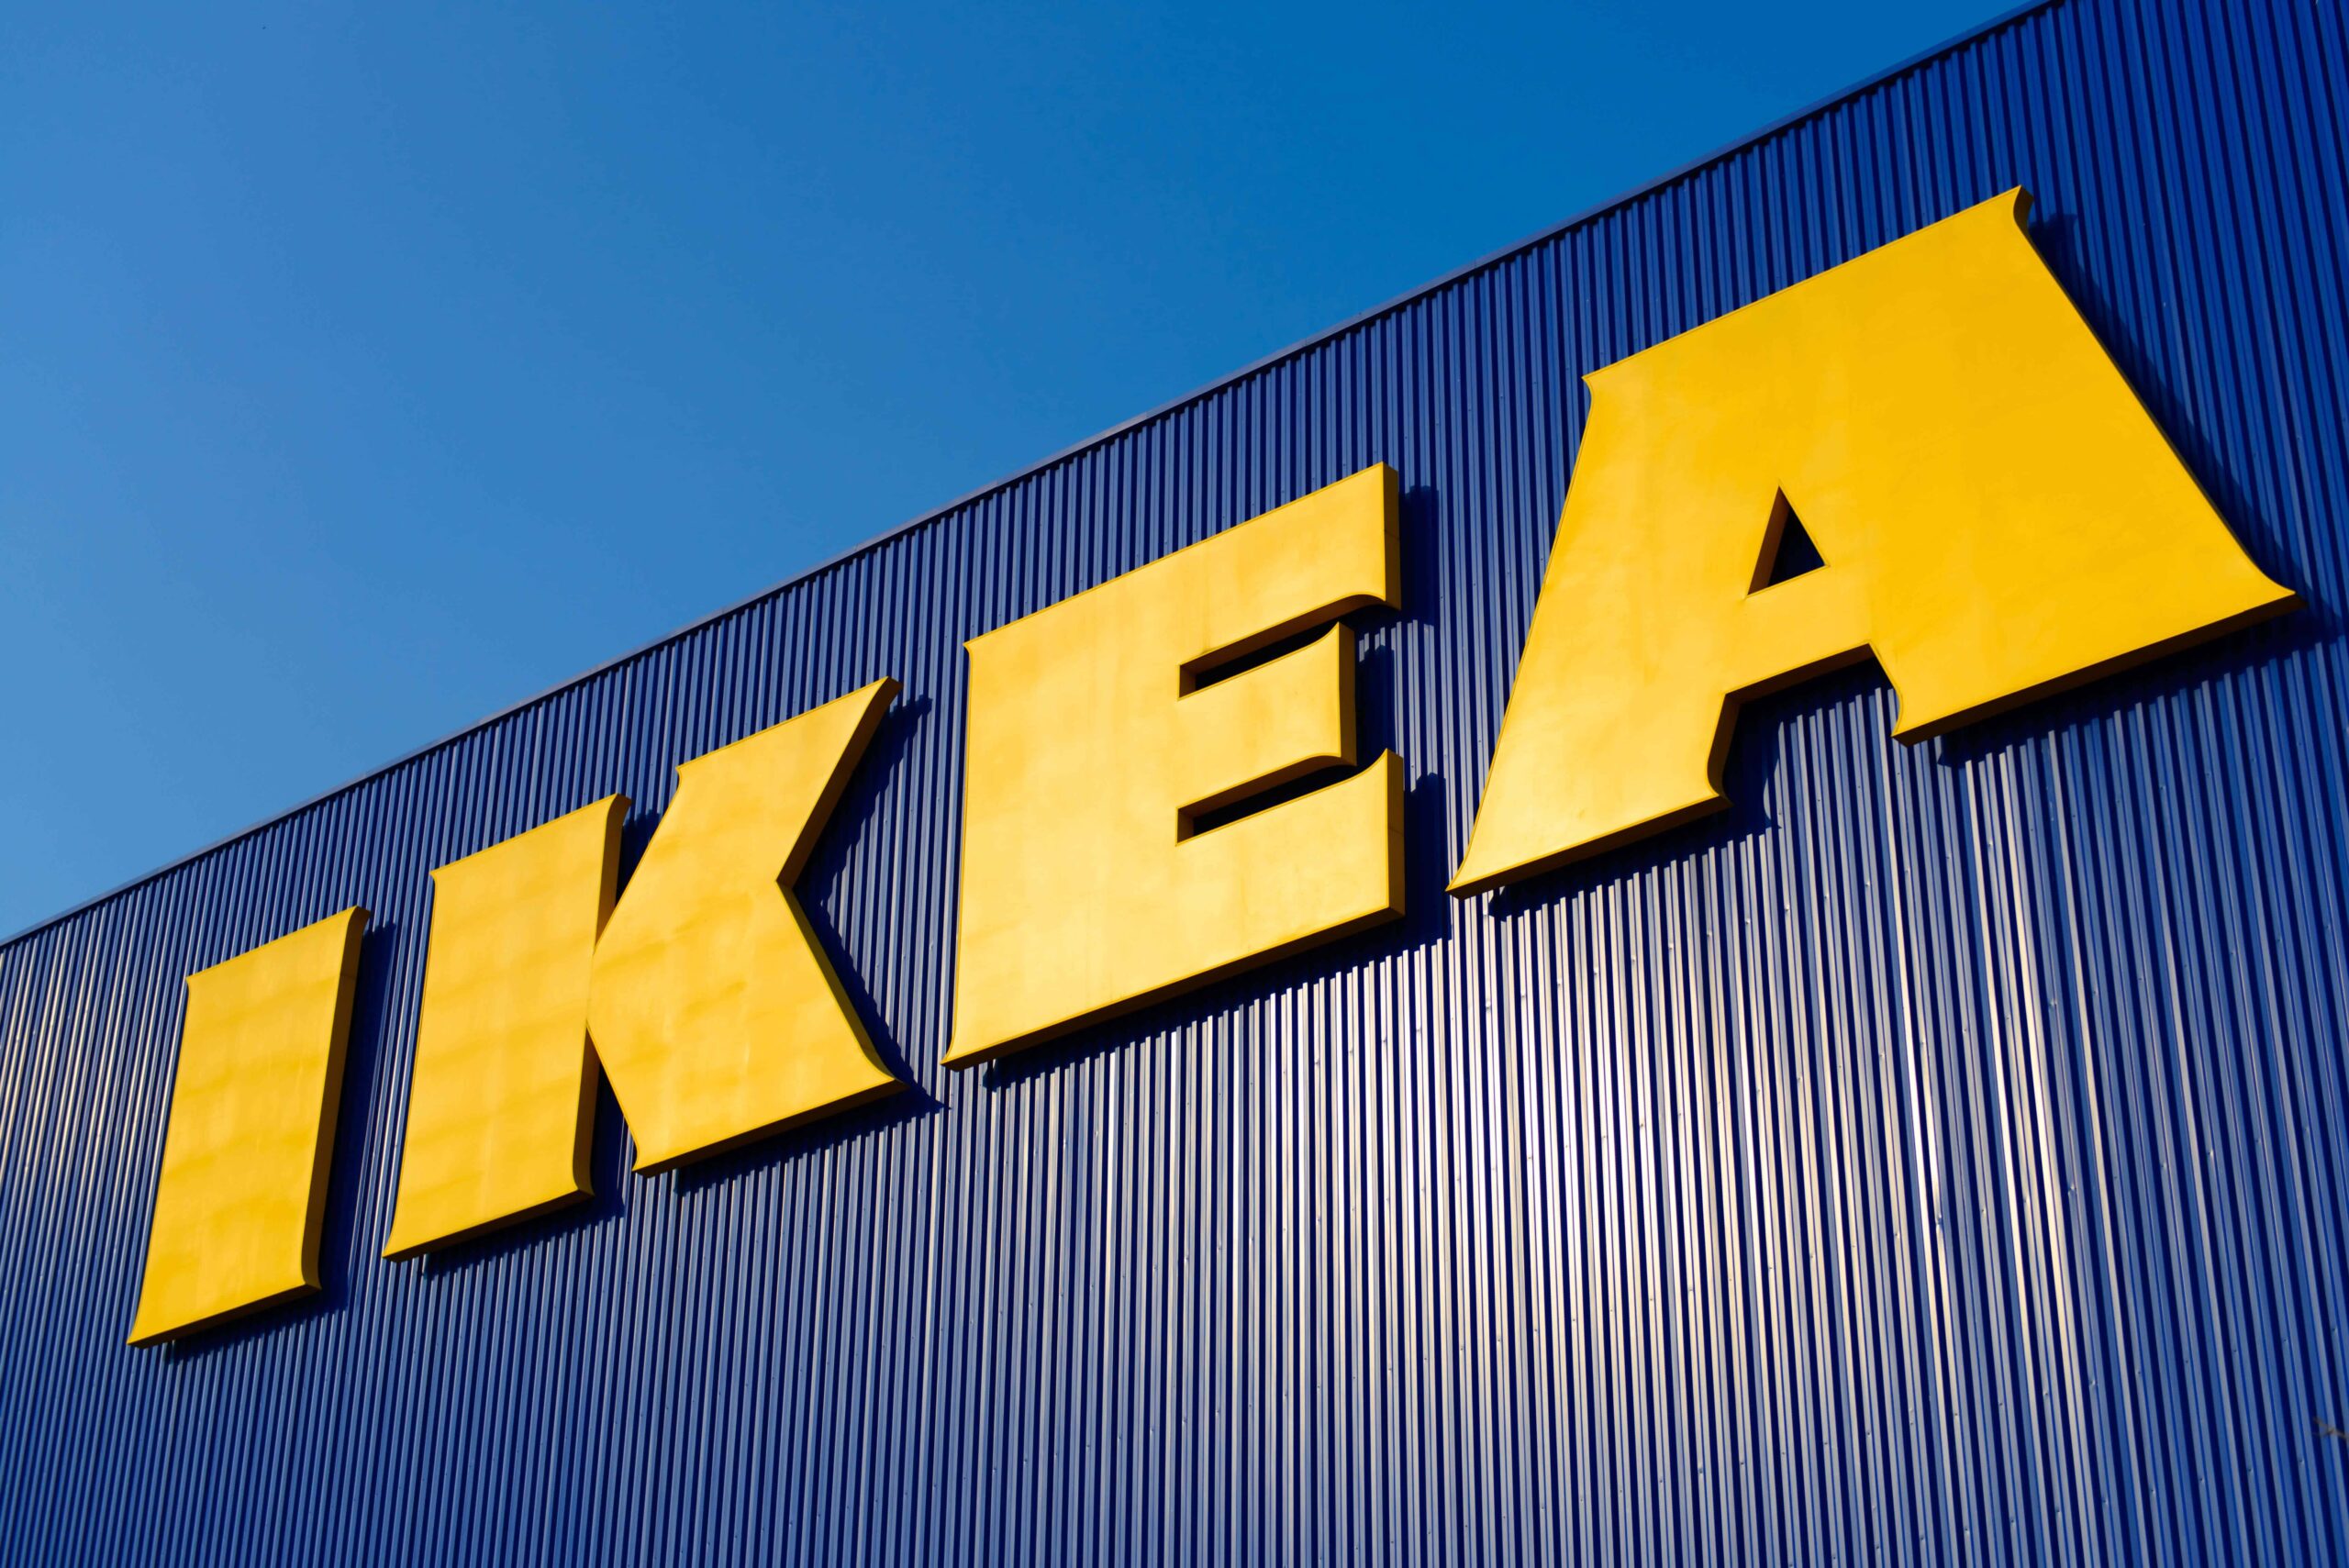 Ikea Eyes US Sites to Anchor Mixed Use Development 1